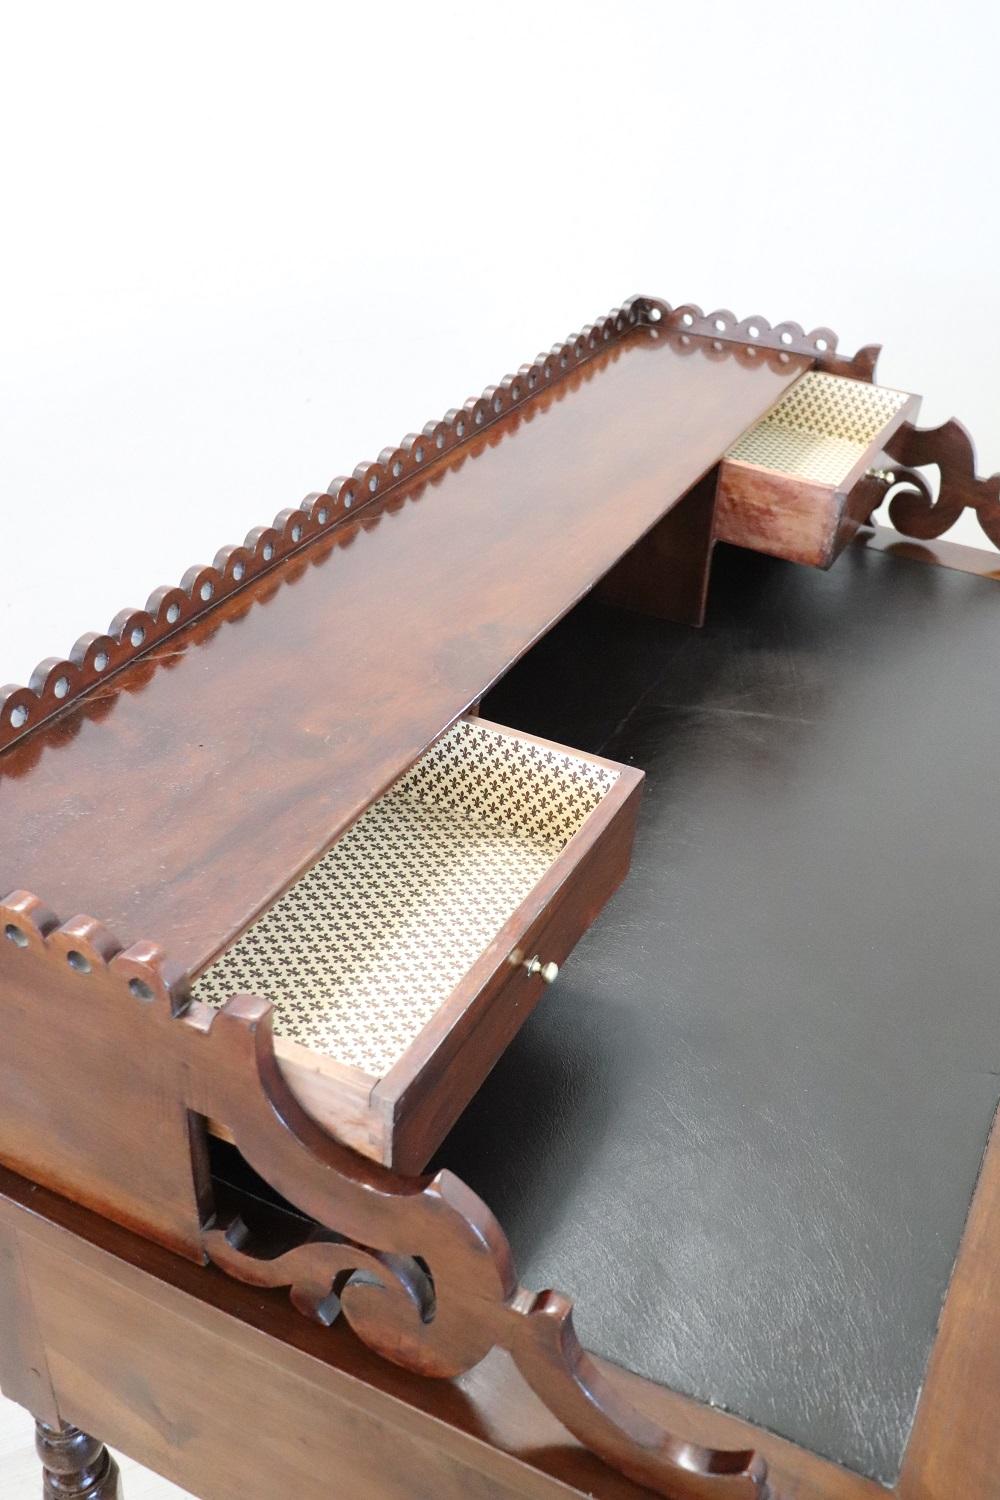 19th Century Italian Louis Philippe Walnut Wood Writing Desk In Good Condition For Sale In Casale Monferrato, IT